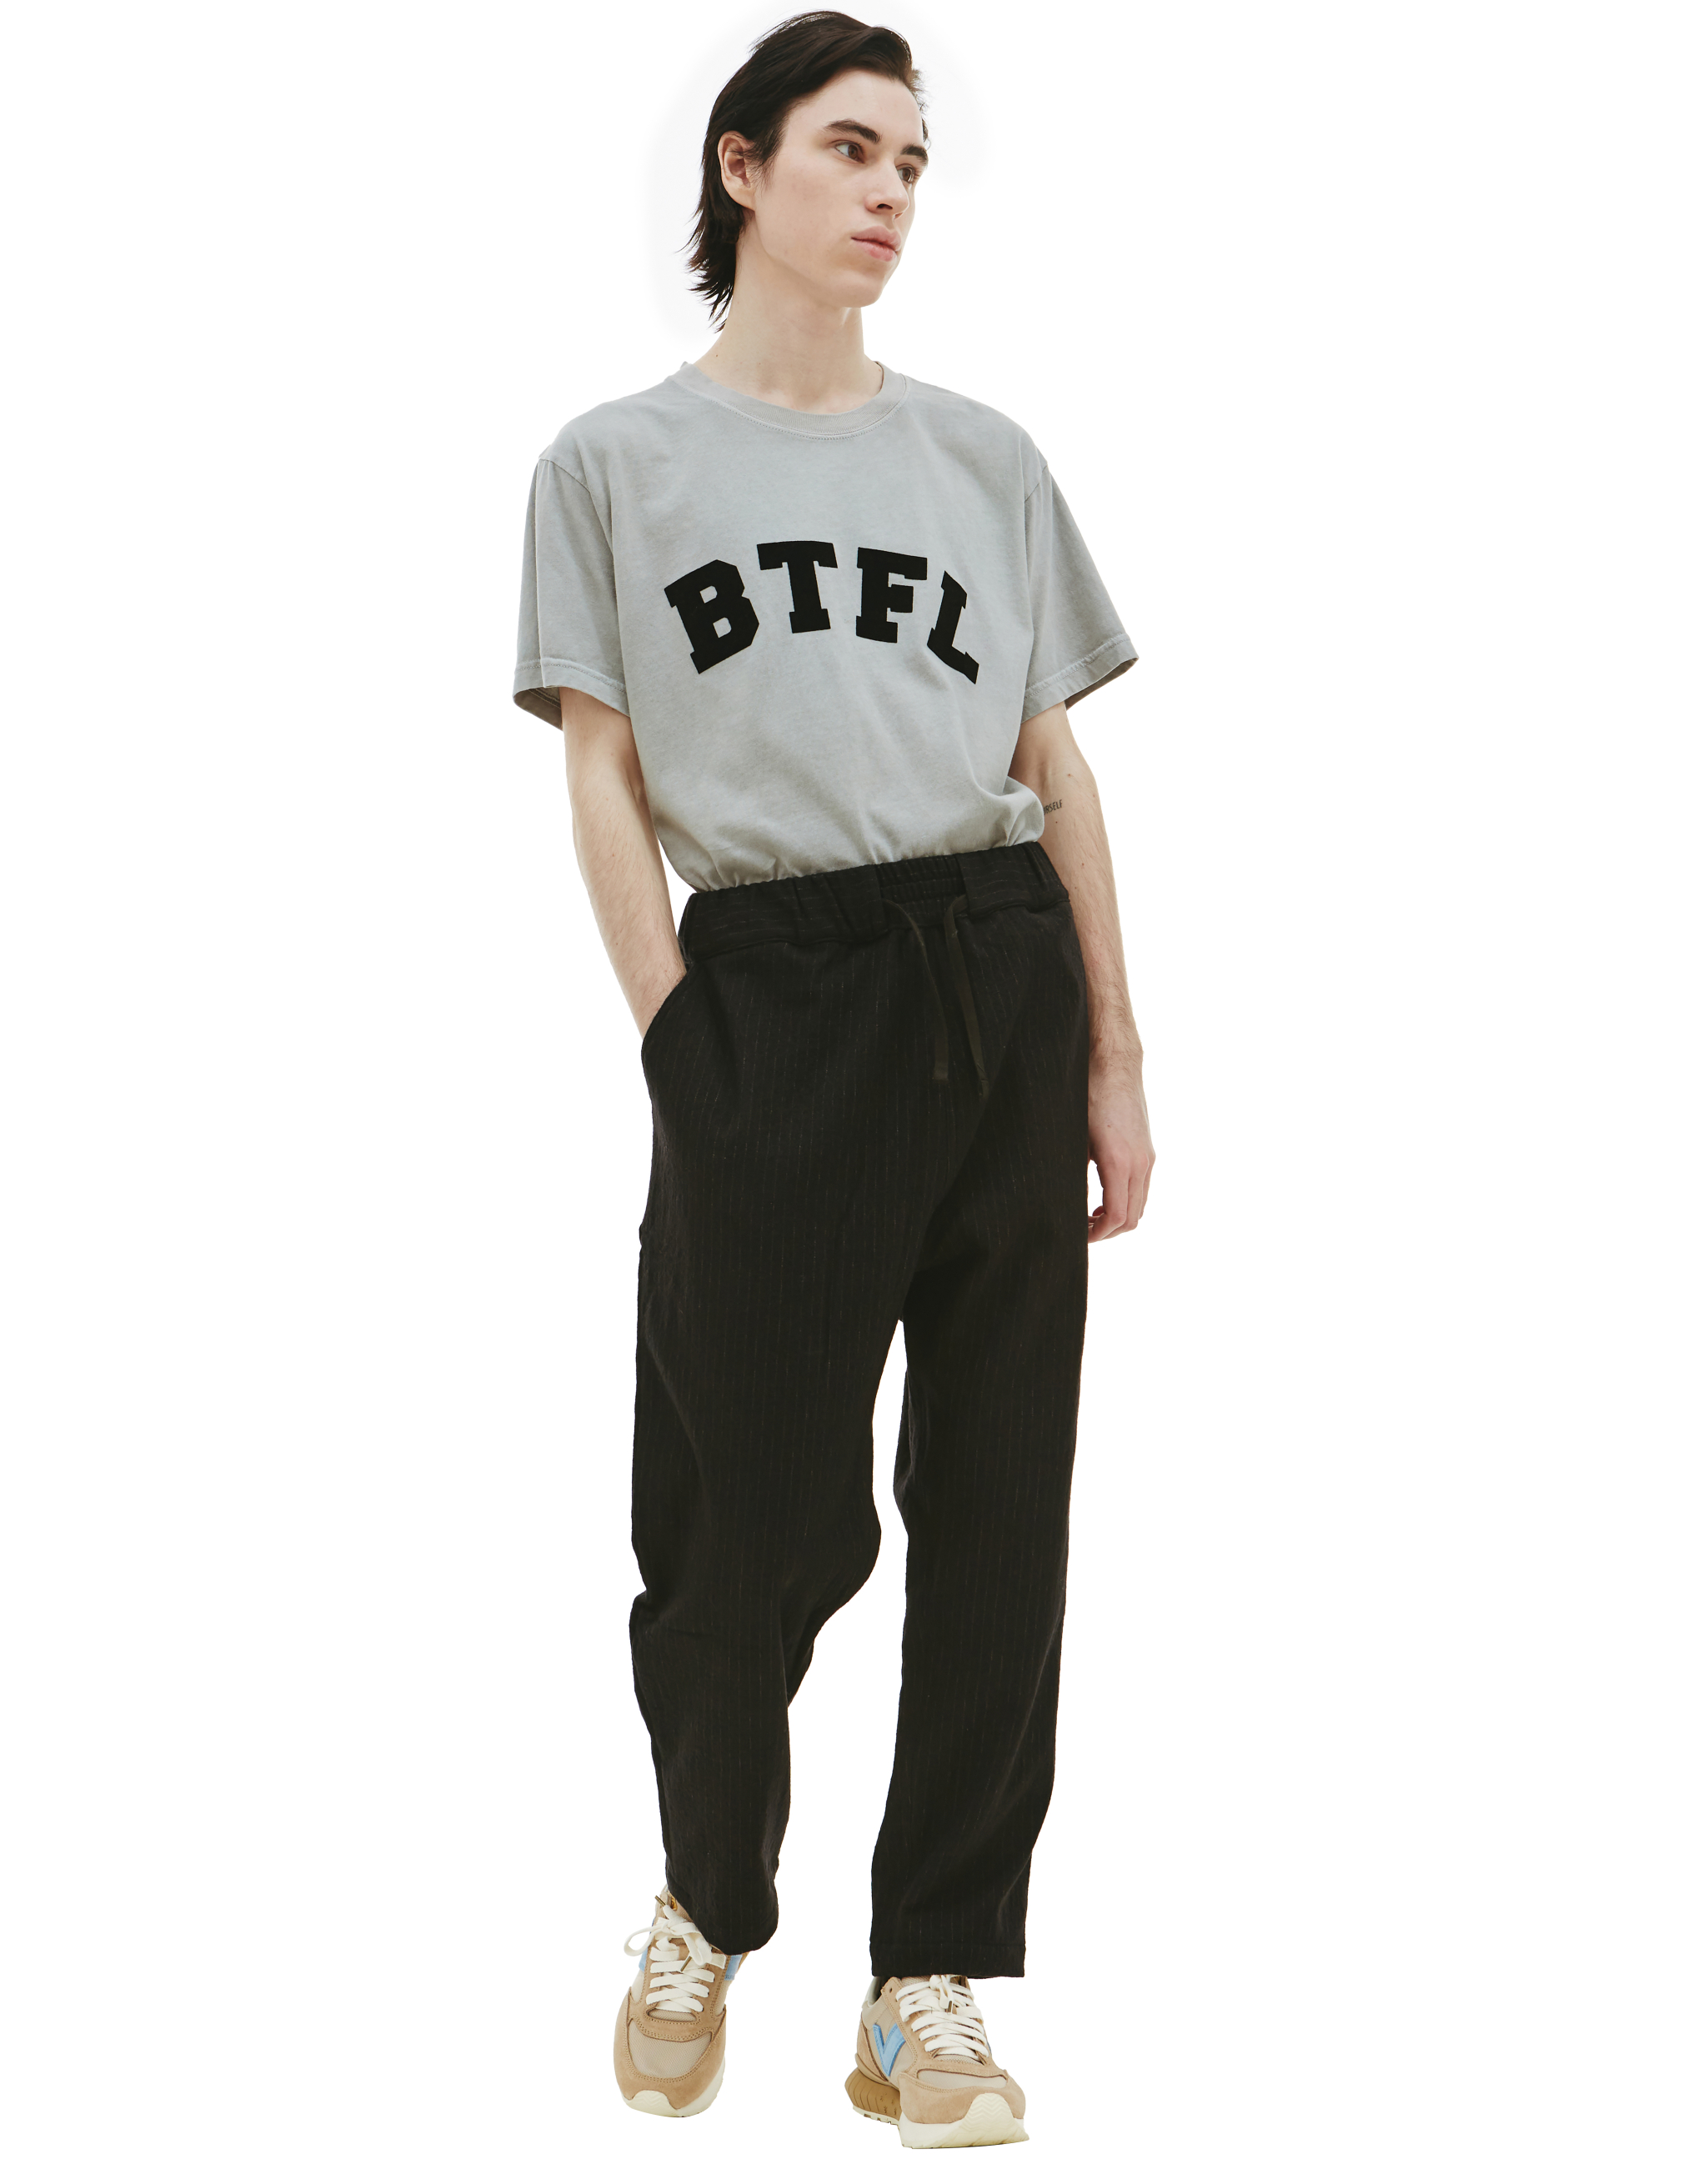 Зауженные брюки в полоску BTFL BTFLAW22B005, размер XL